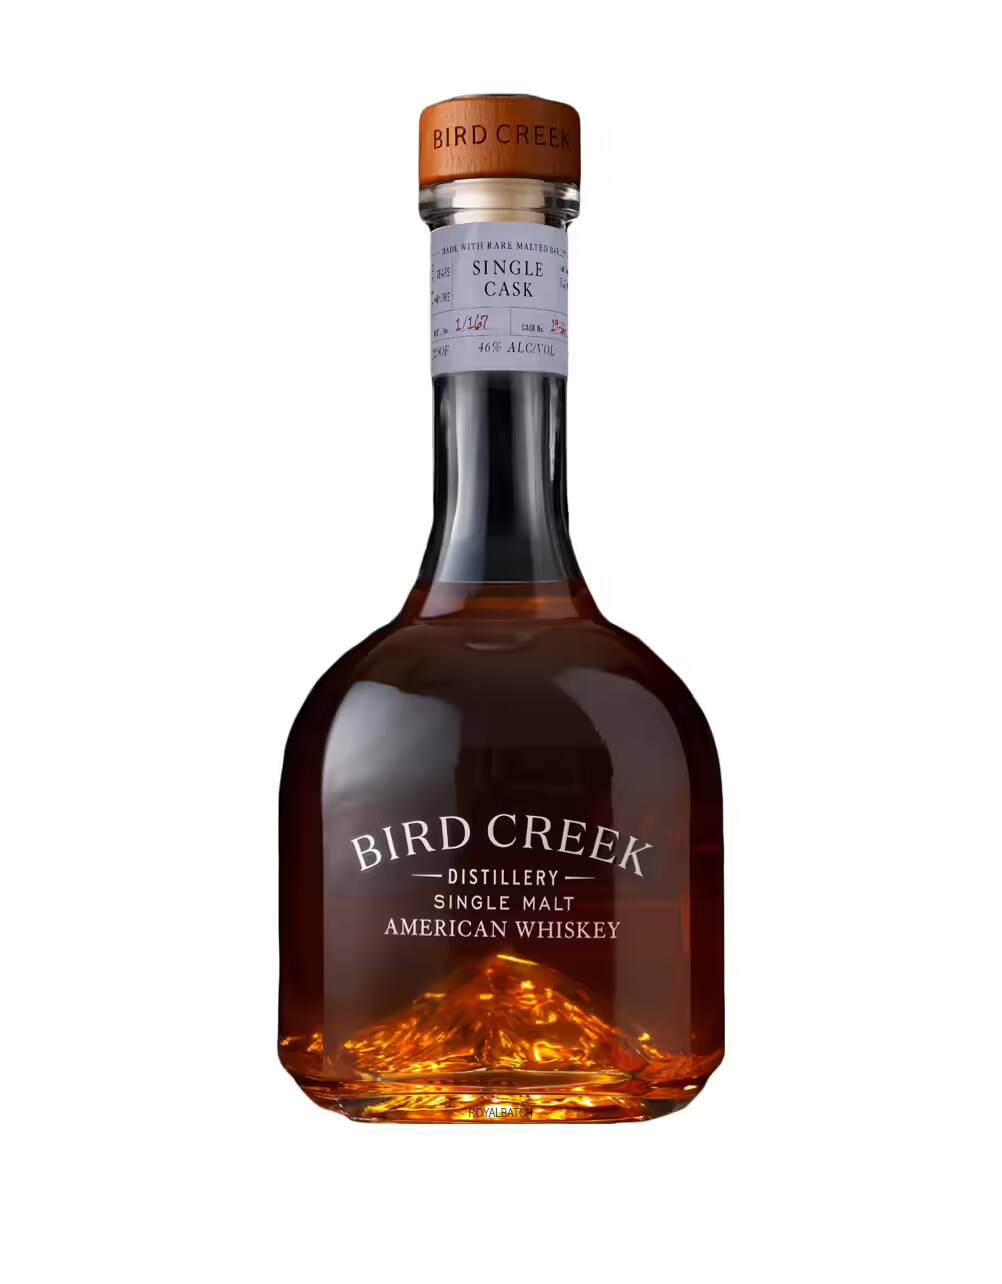 Bird Creek Single Cask Full Pint American Whiskey